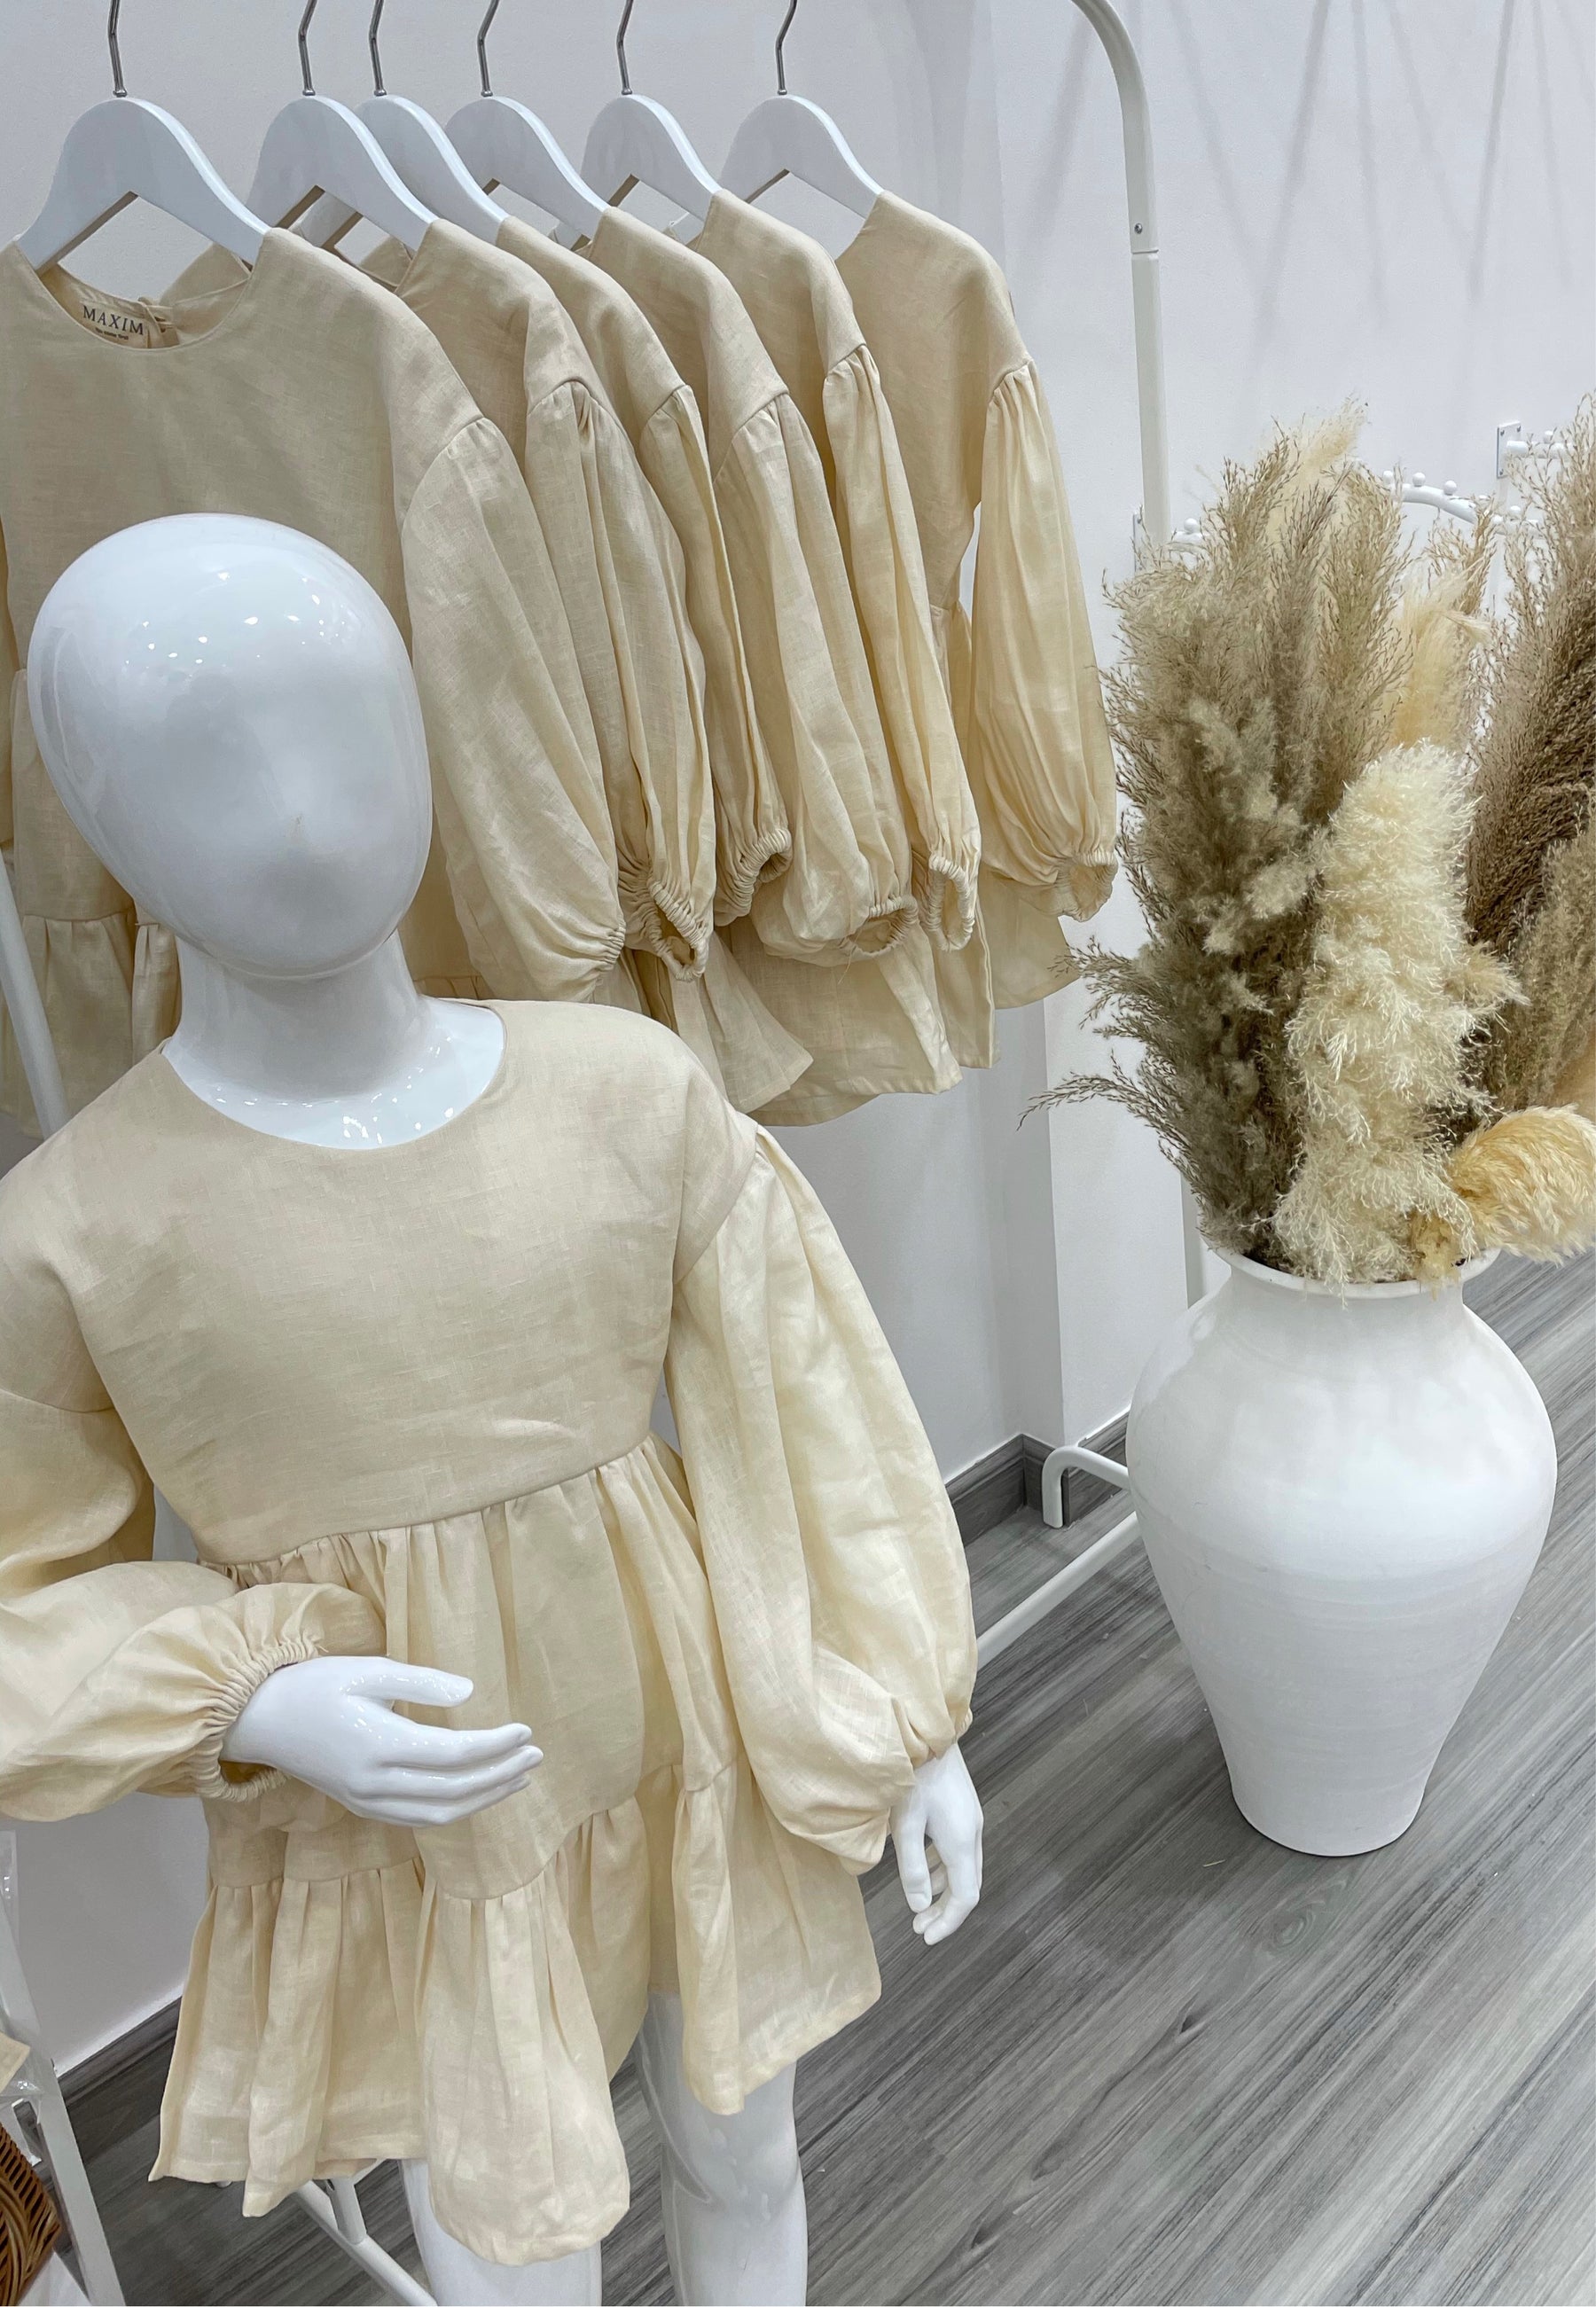 DIH TIERED DRESS-CREAM BEIGE - Maxims Baby Store